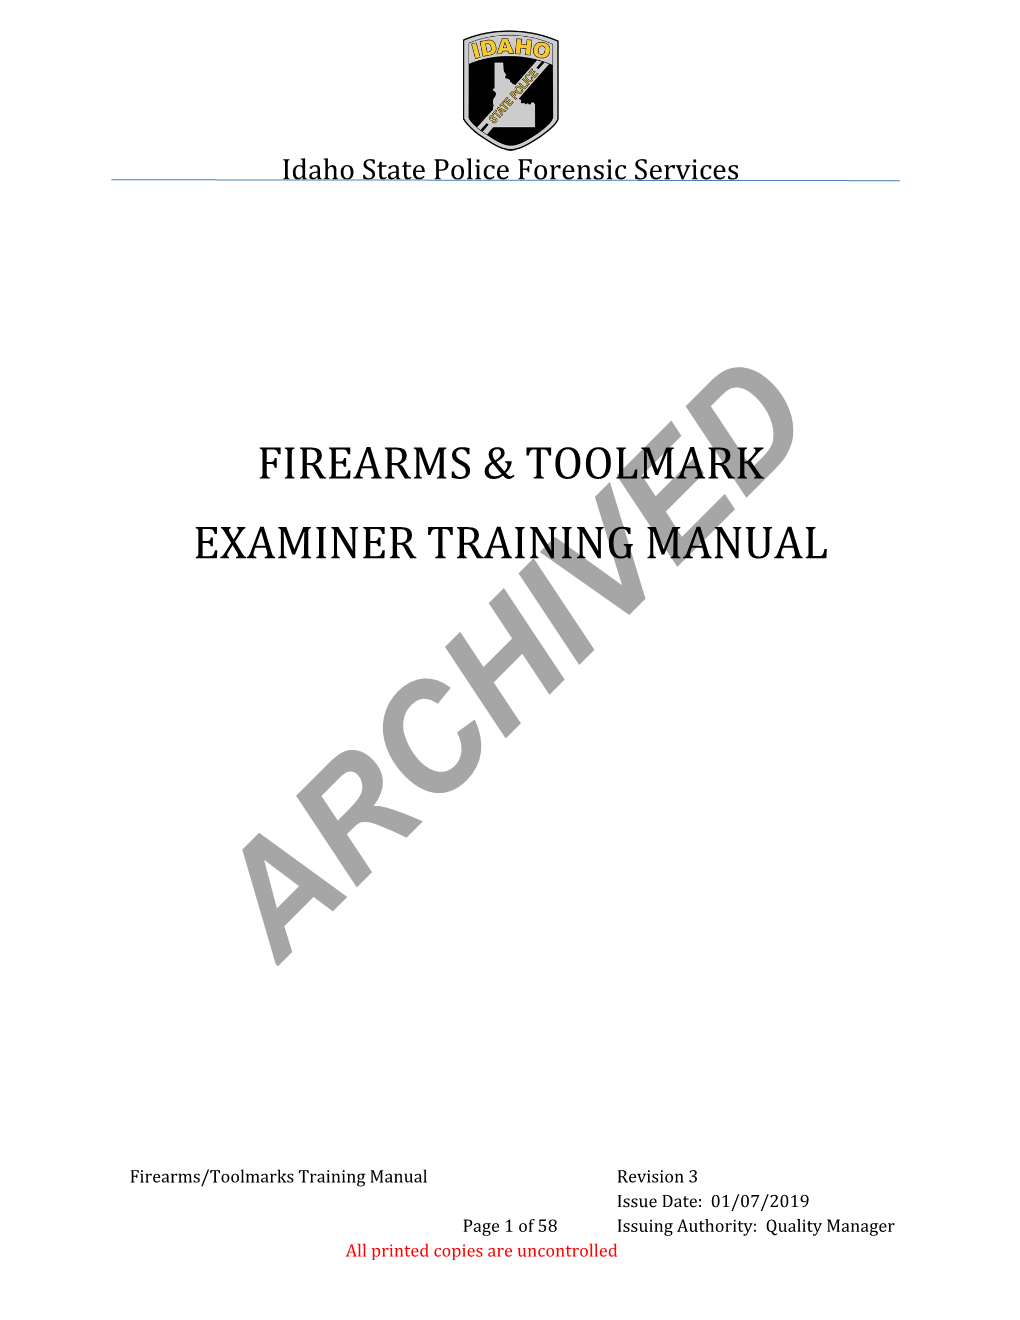 Firearms & Tool Mark Examiner Training Manual